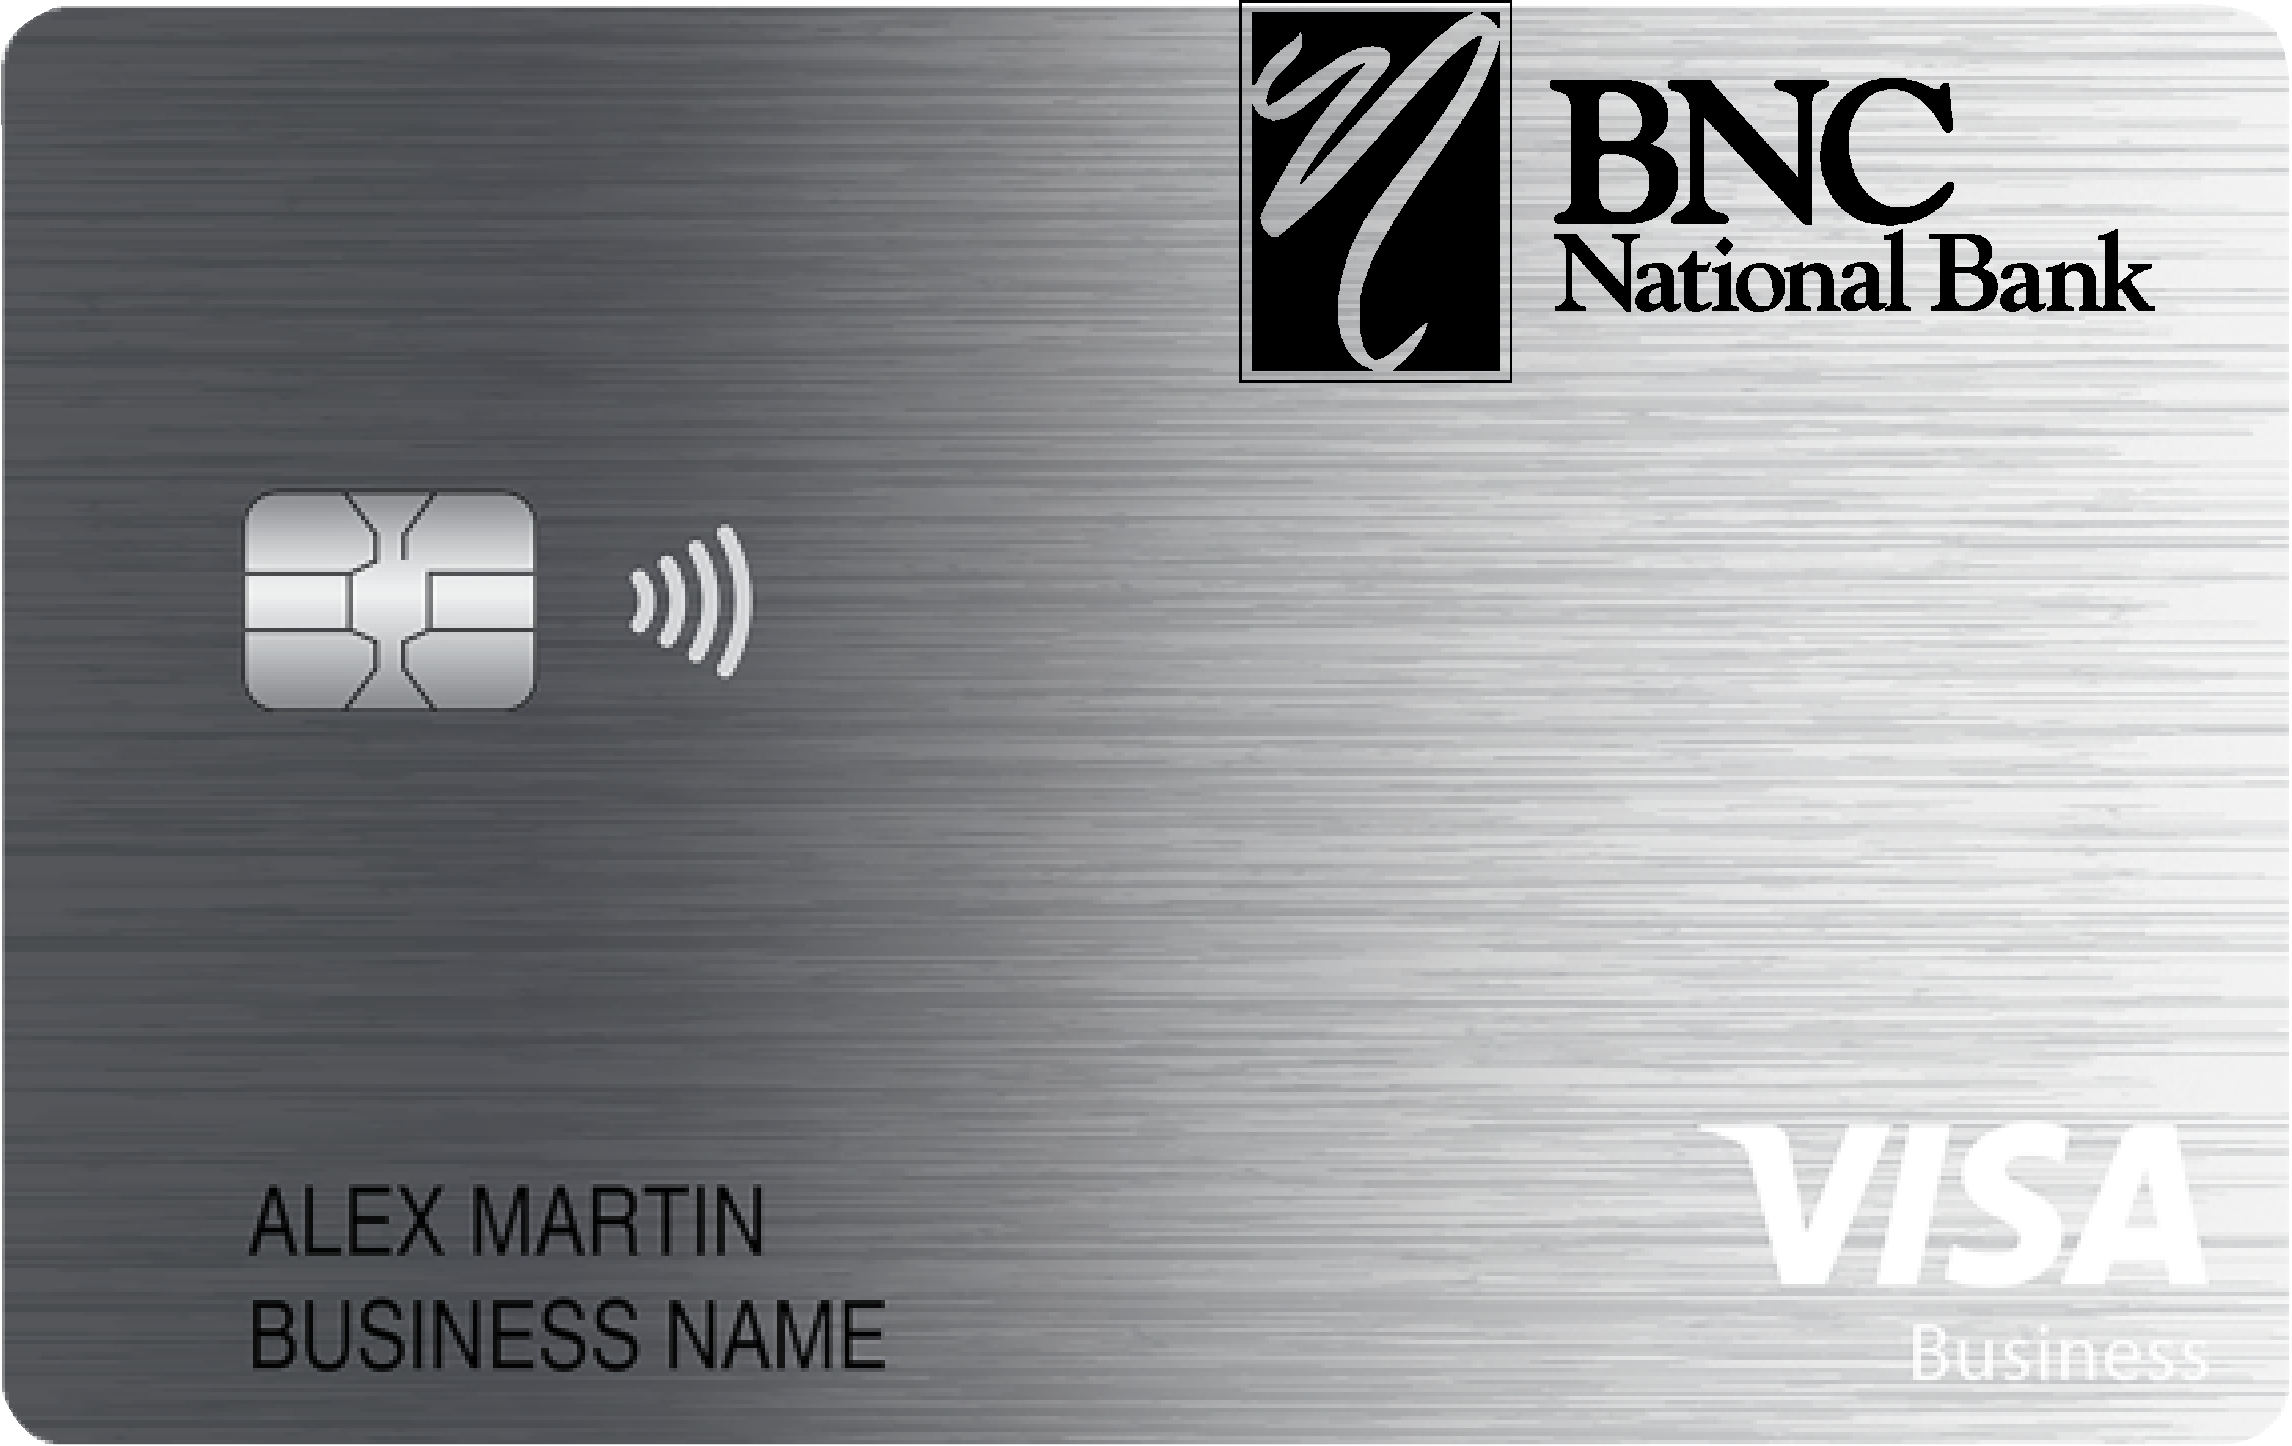 BNC National Bank Business Cash Preferred Card